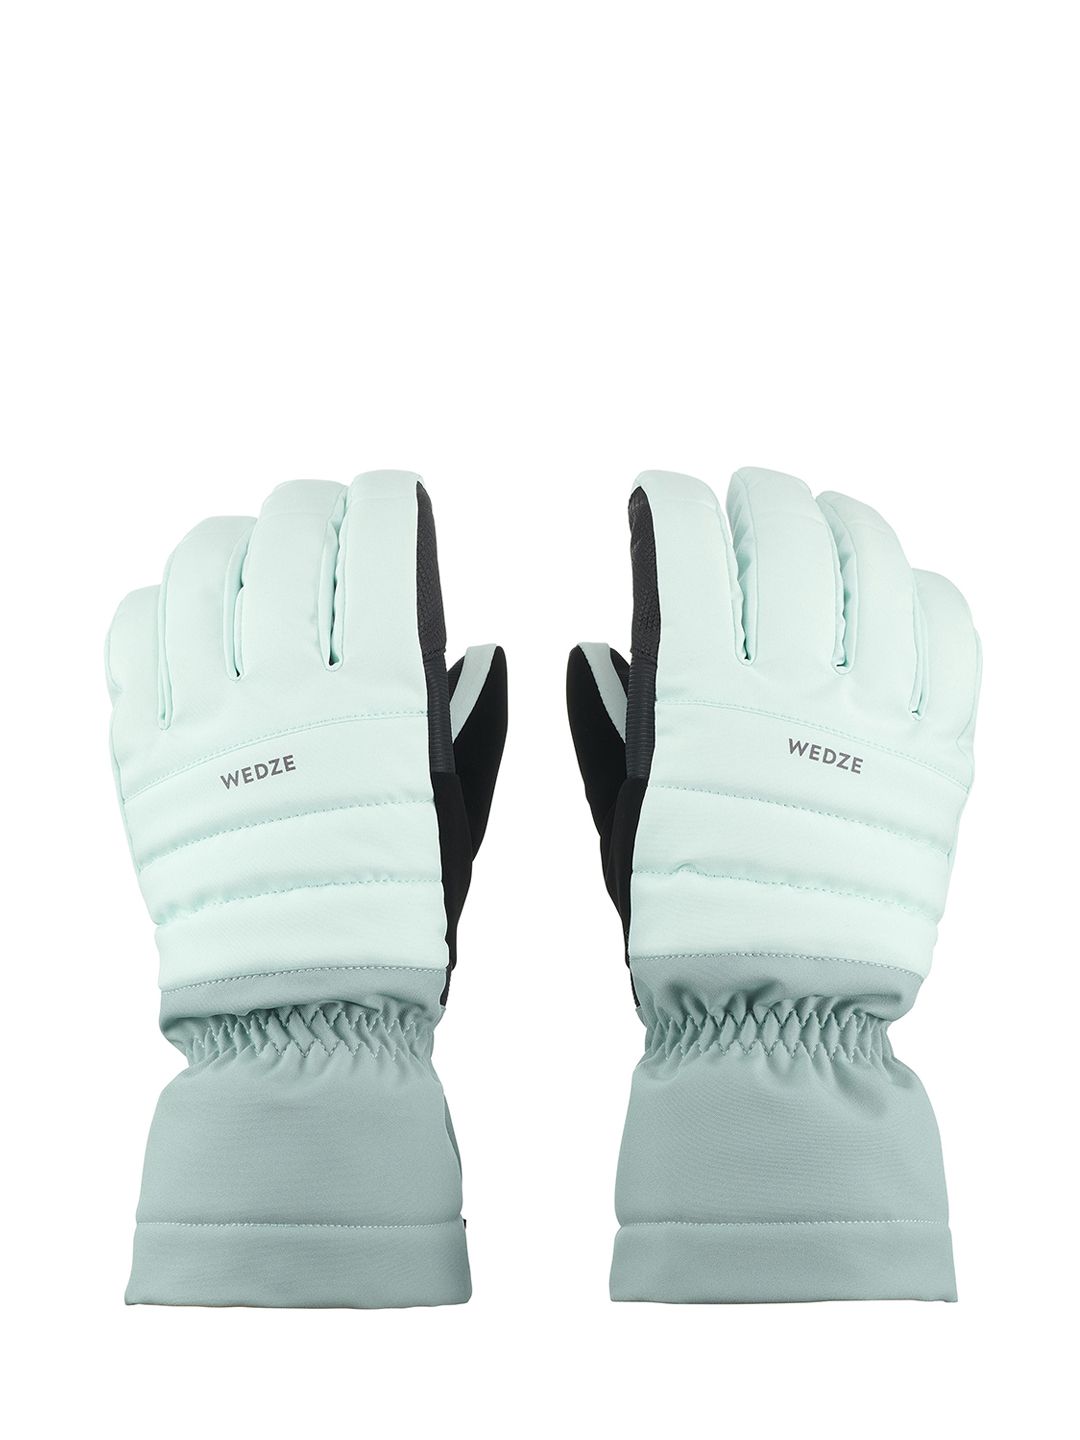 WEDZE By Decathlon Sea Green Ski Gloves Price in India